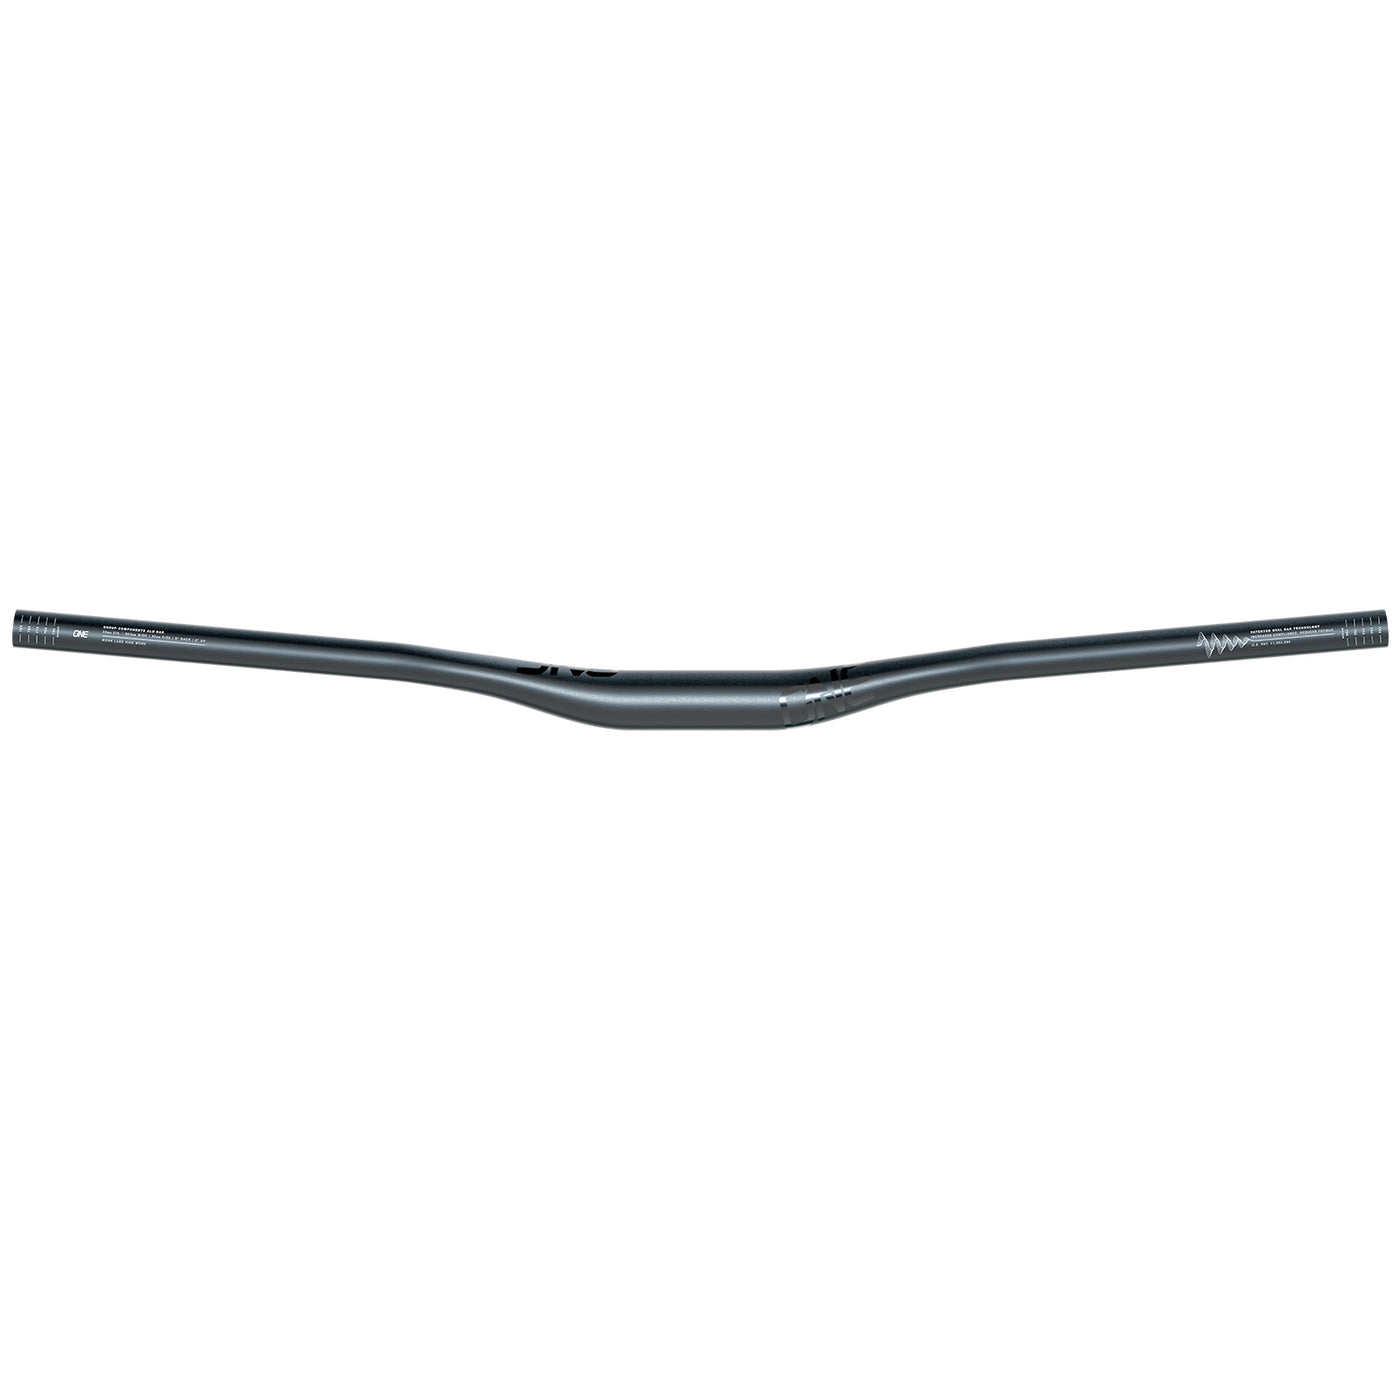 OneUp Components Aluminium Bars - 35mm - number:800 - 20mm Rise - Black